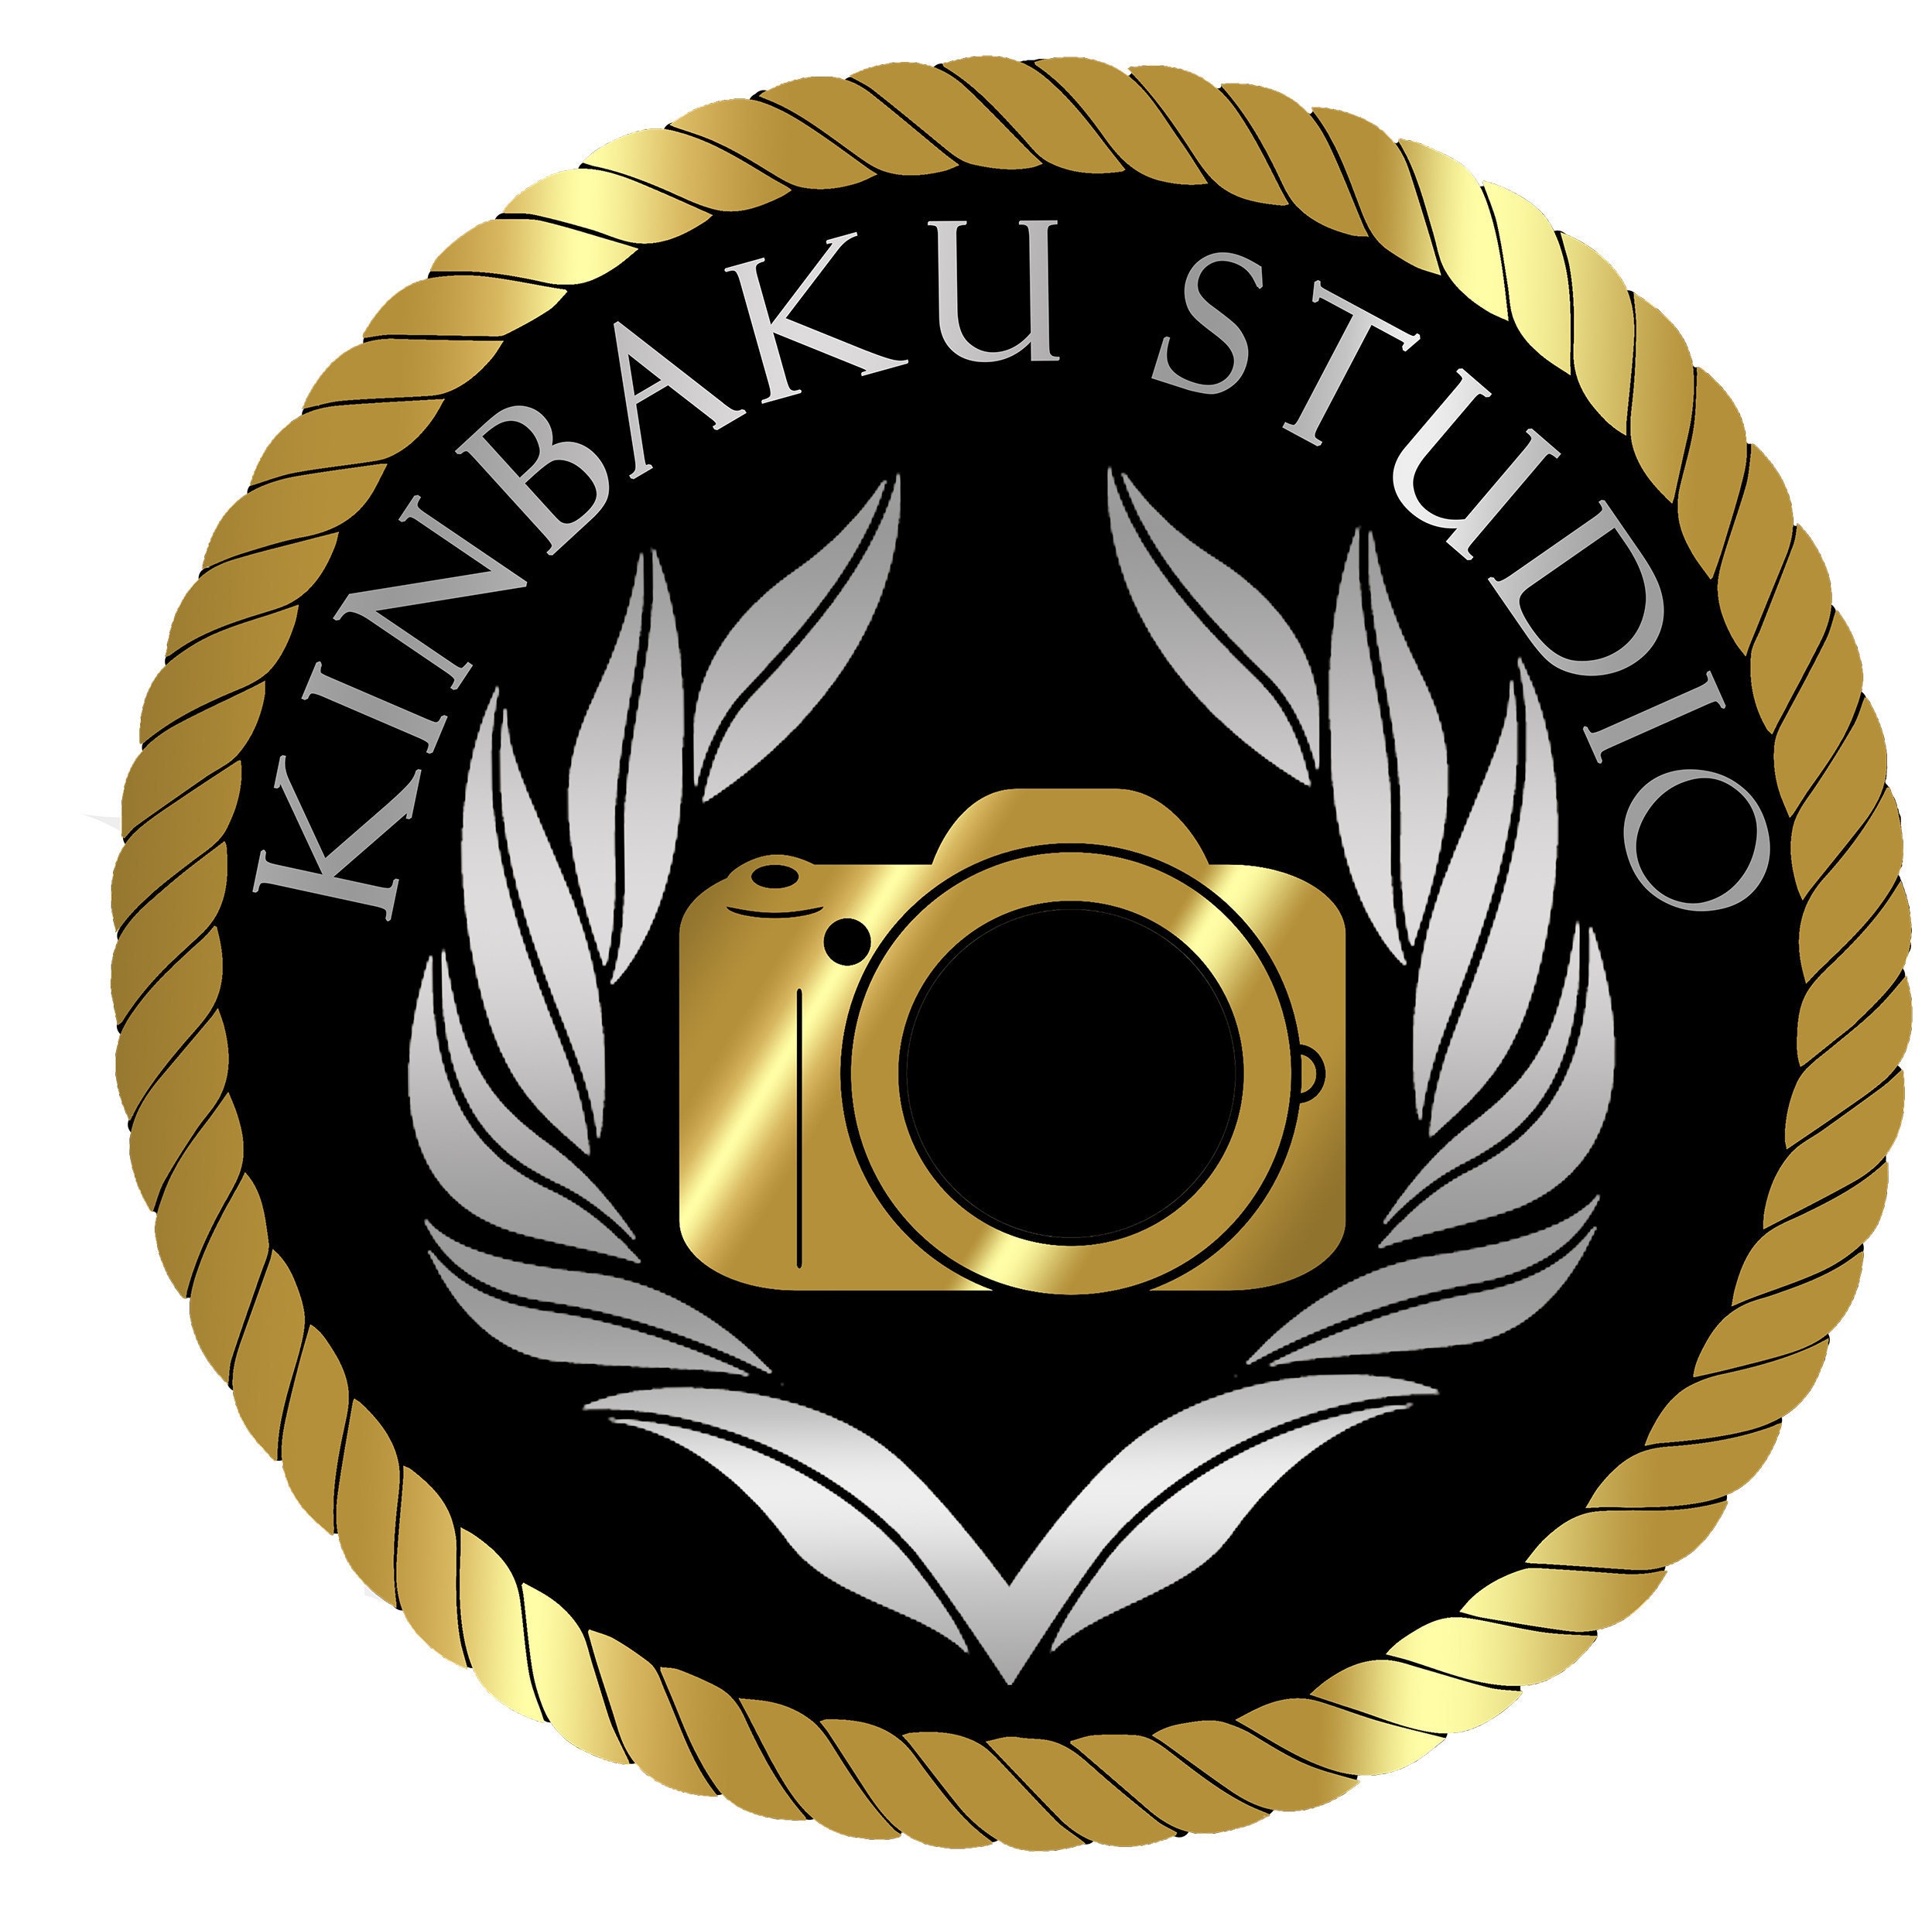 Red Bamboo Silk Rope — Kinbaku Studio